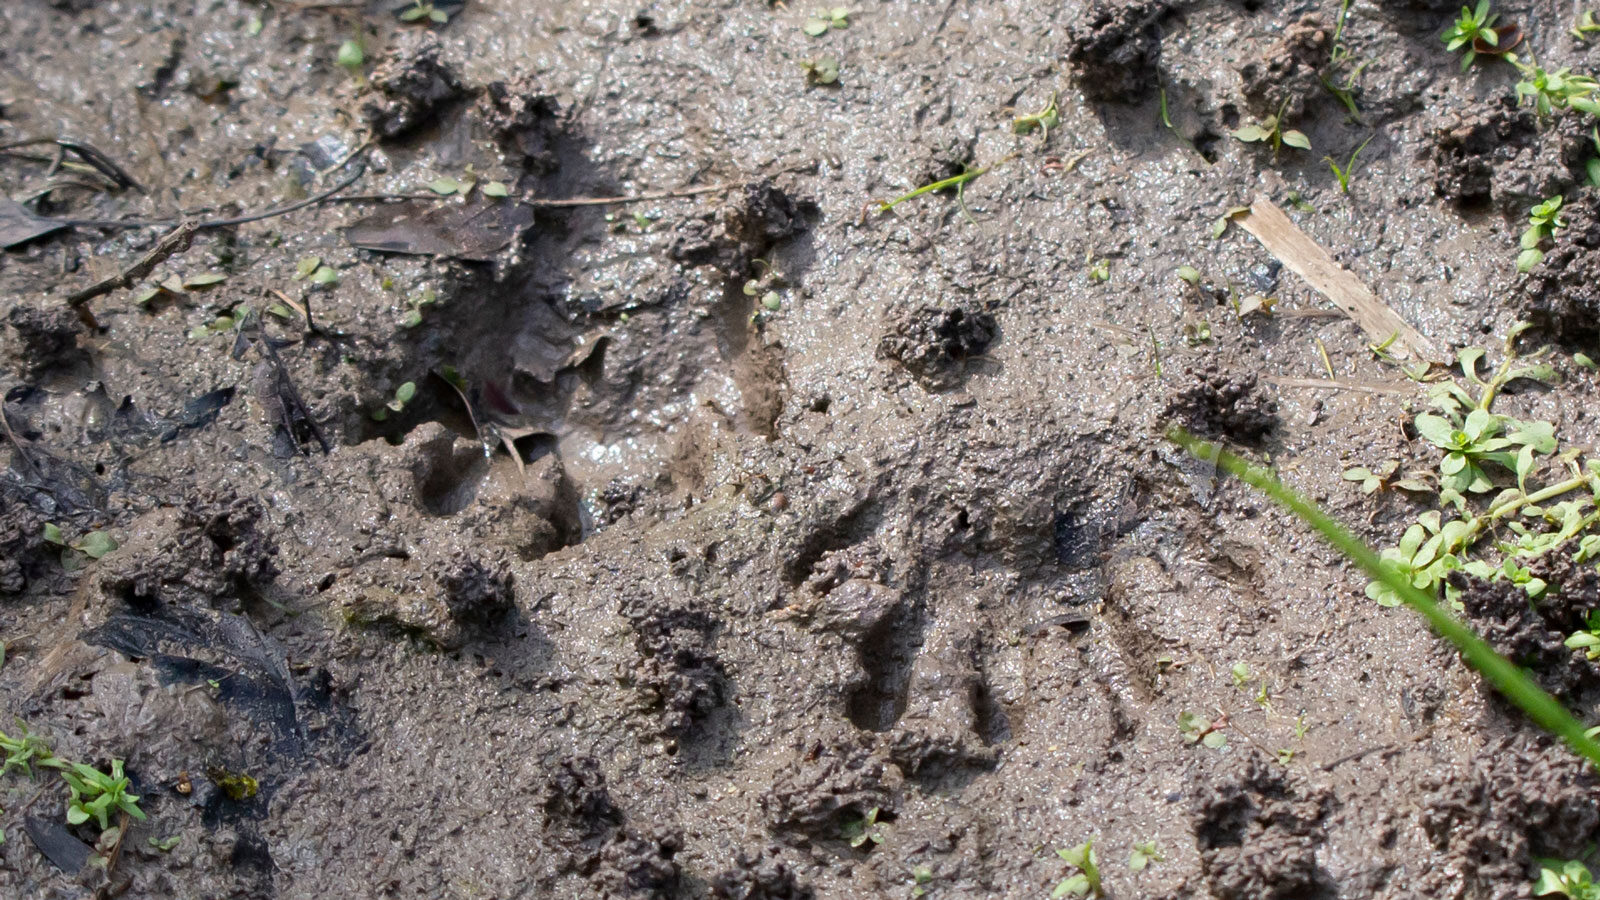 Raccoon tracks in the mud